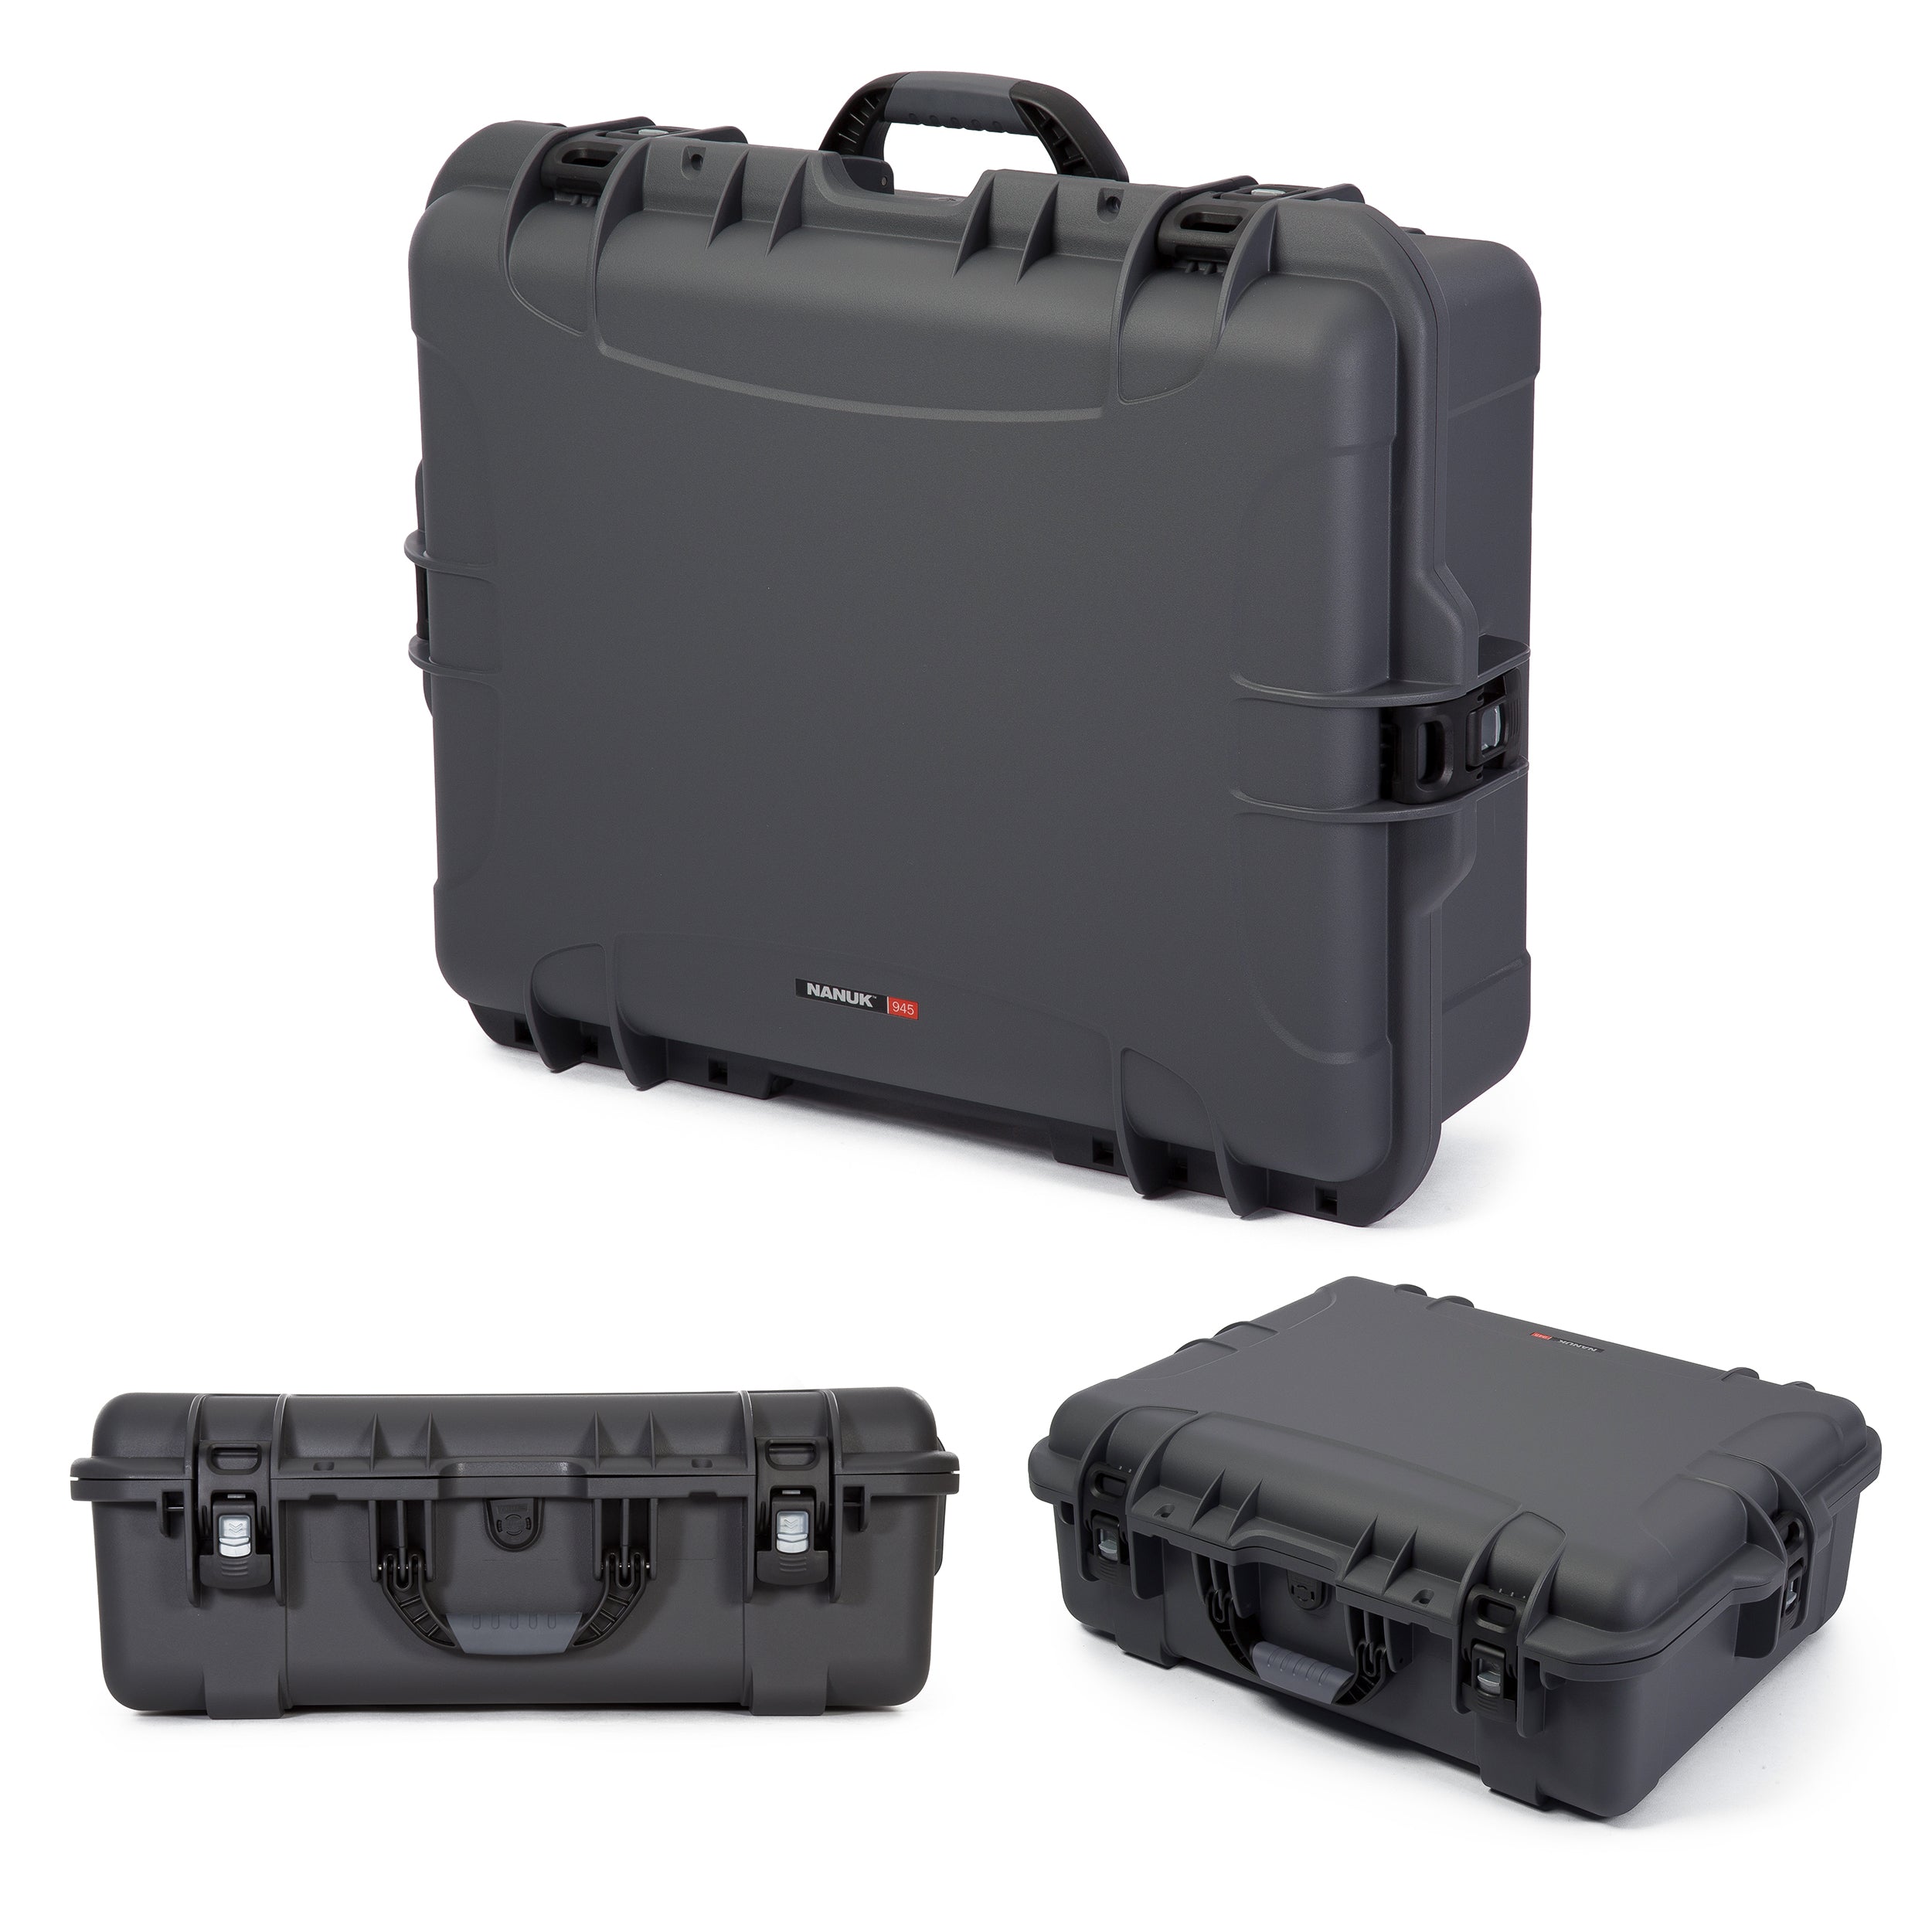 Nanuk 945-DJI47 Waterproof Hard Drone Case with Custom Foam Insert for DJI Phantom 4/ Phantom 4 Pro (Pro+) / Advanced (Advanced+) & Phantom 3 - Graphite